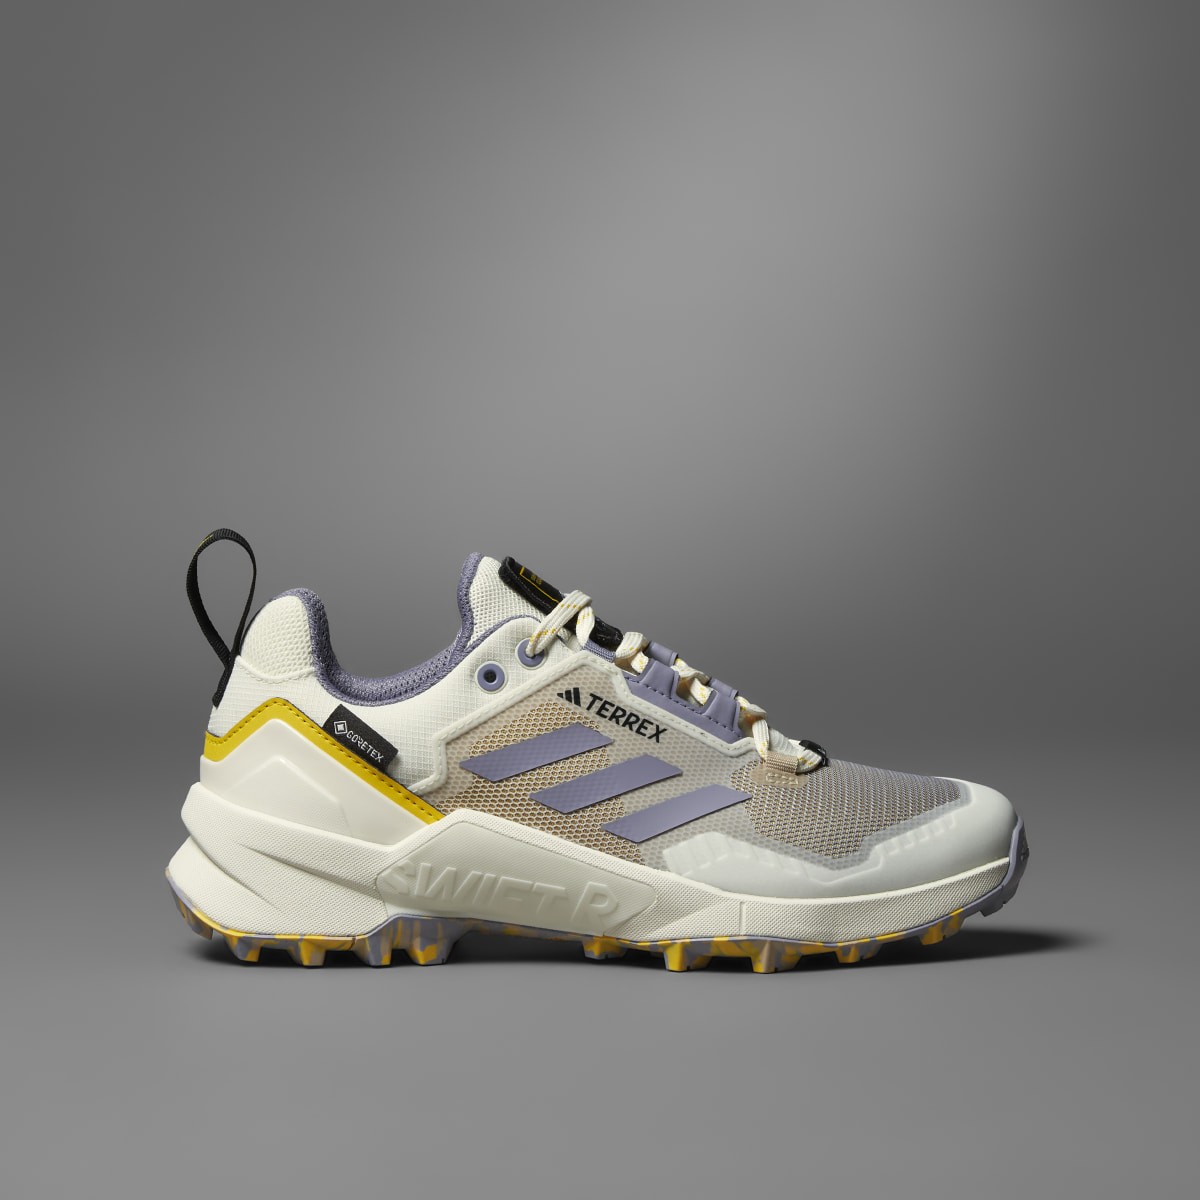 Adidas Terrex Swift R3 GORE-TEX Hiking Shoes. 4